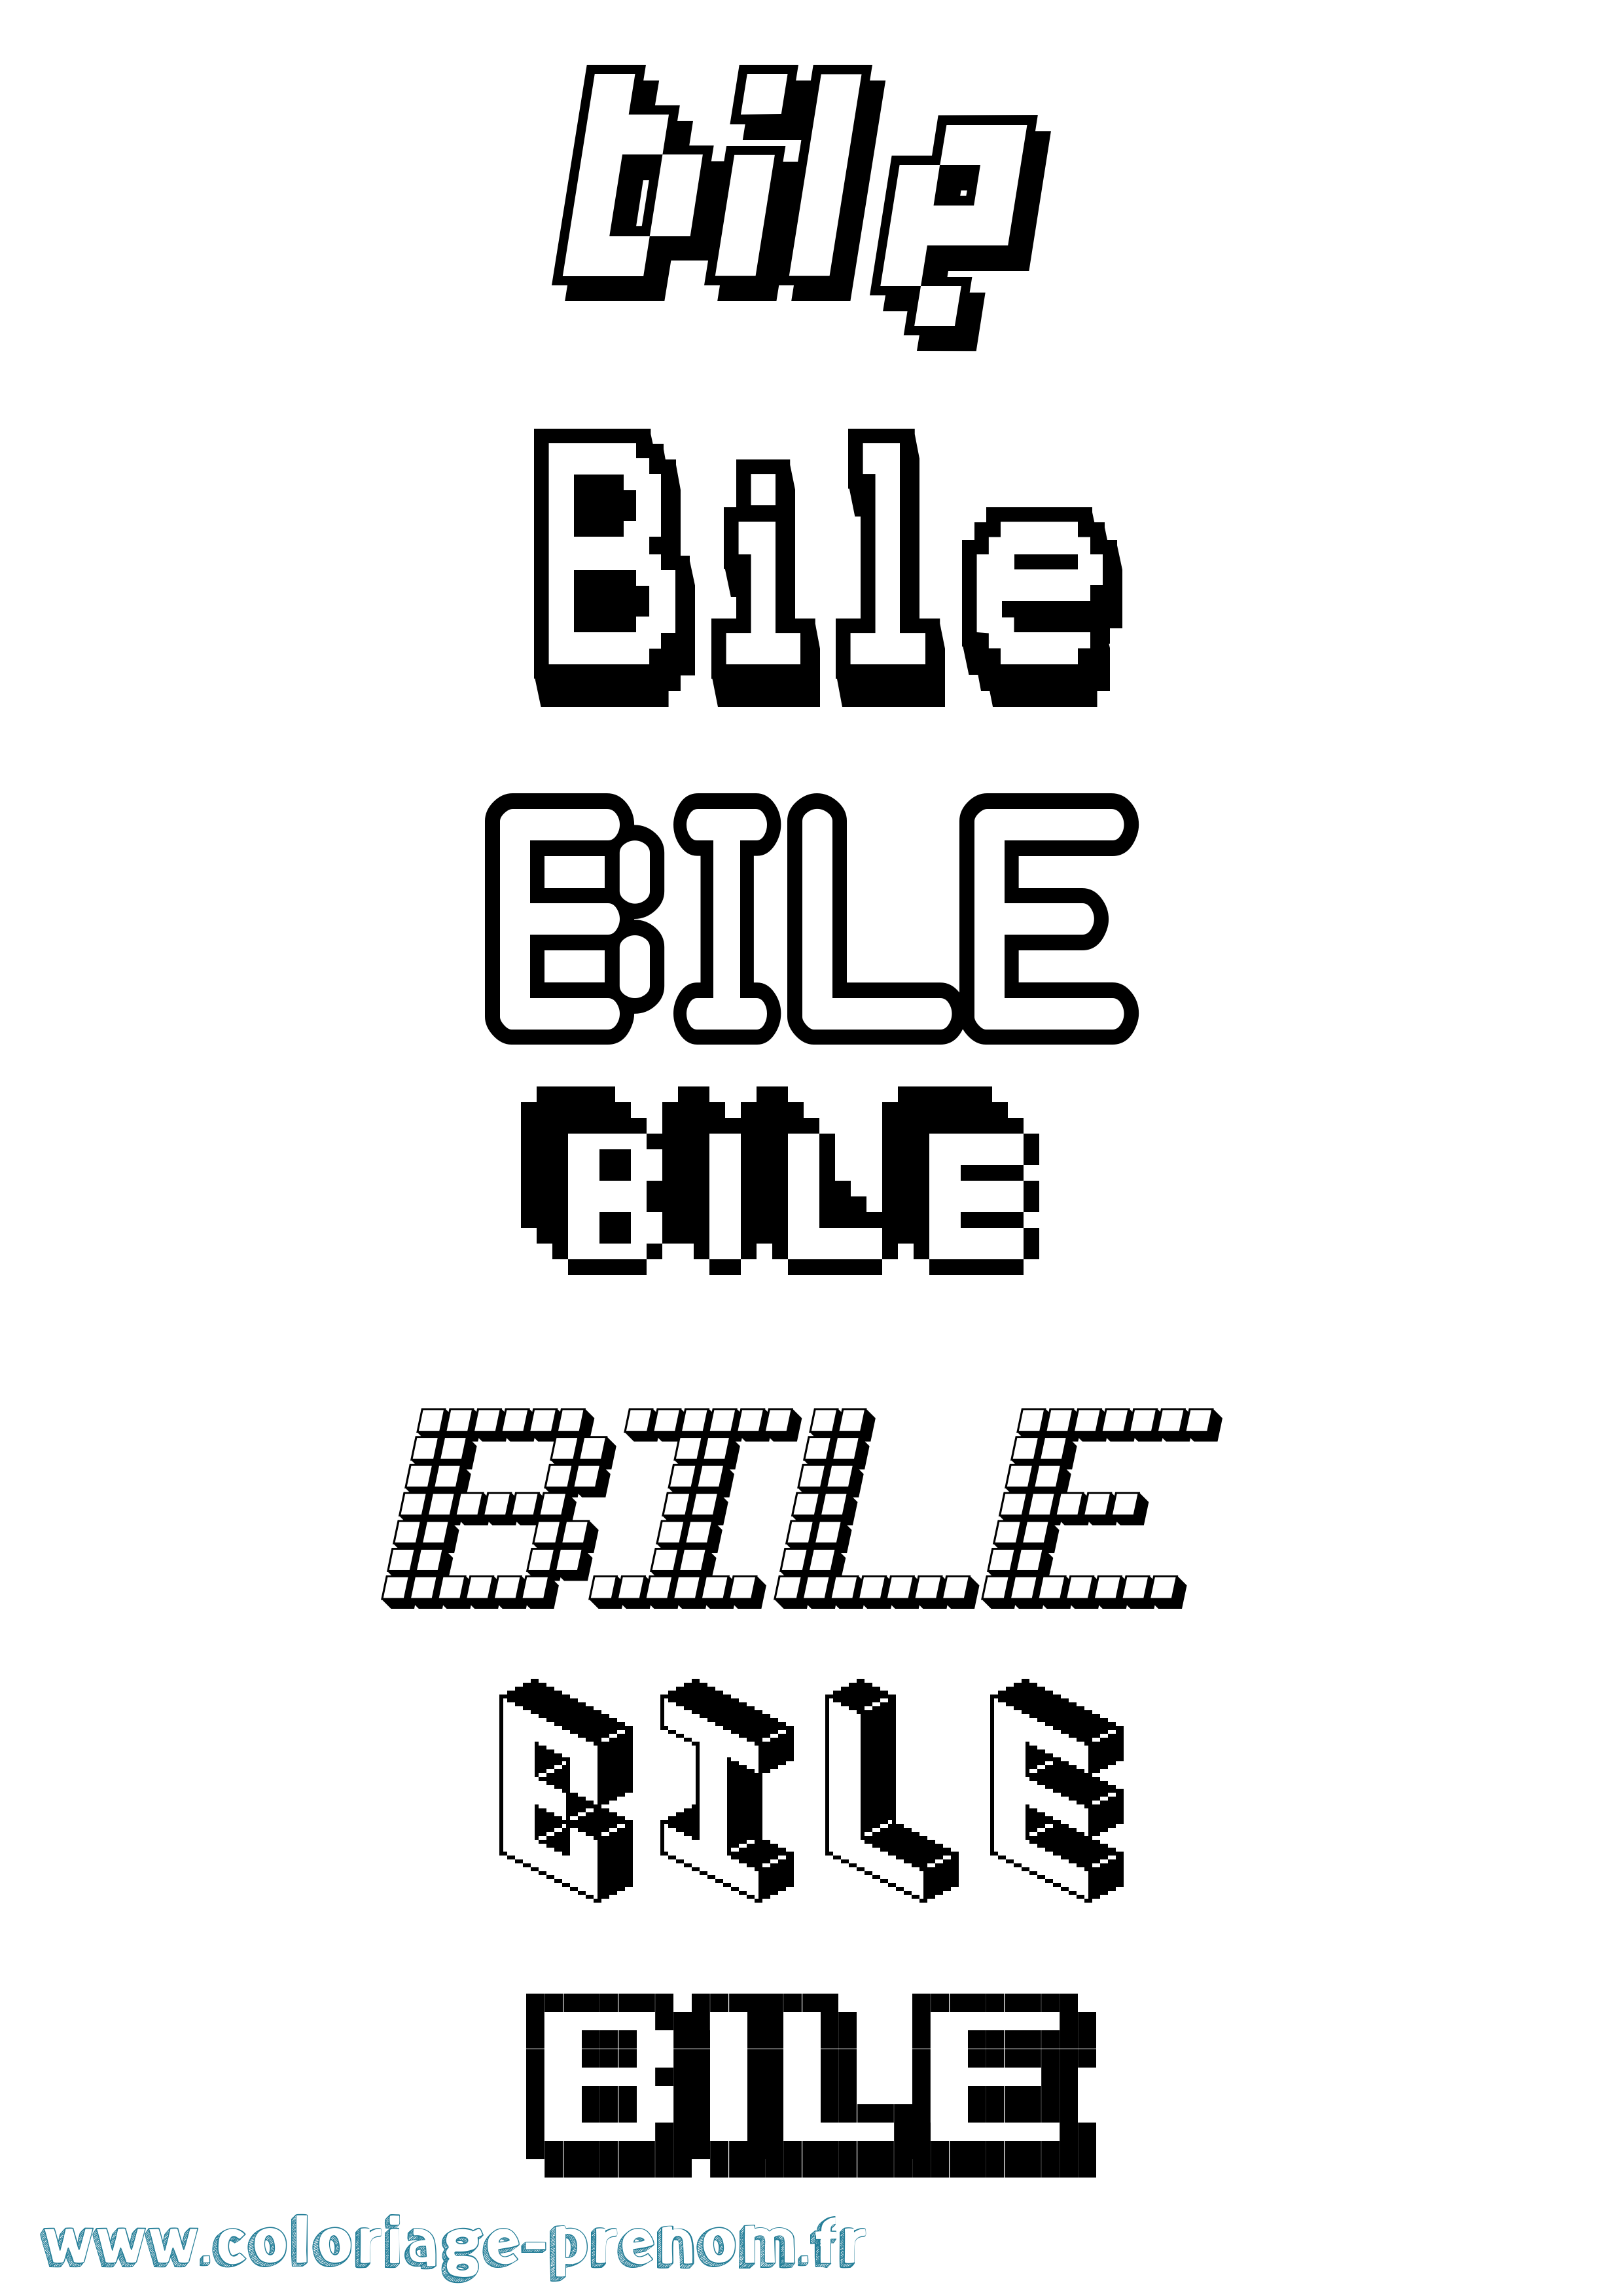 Coloriage prénom Bile Pixel